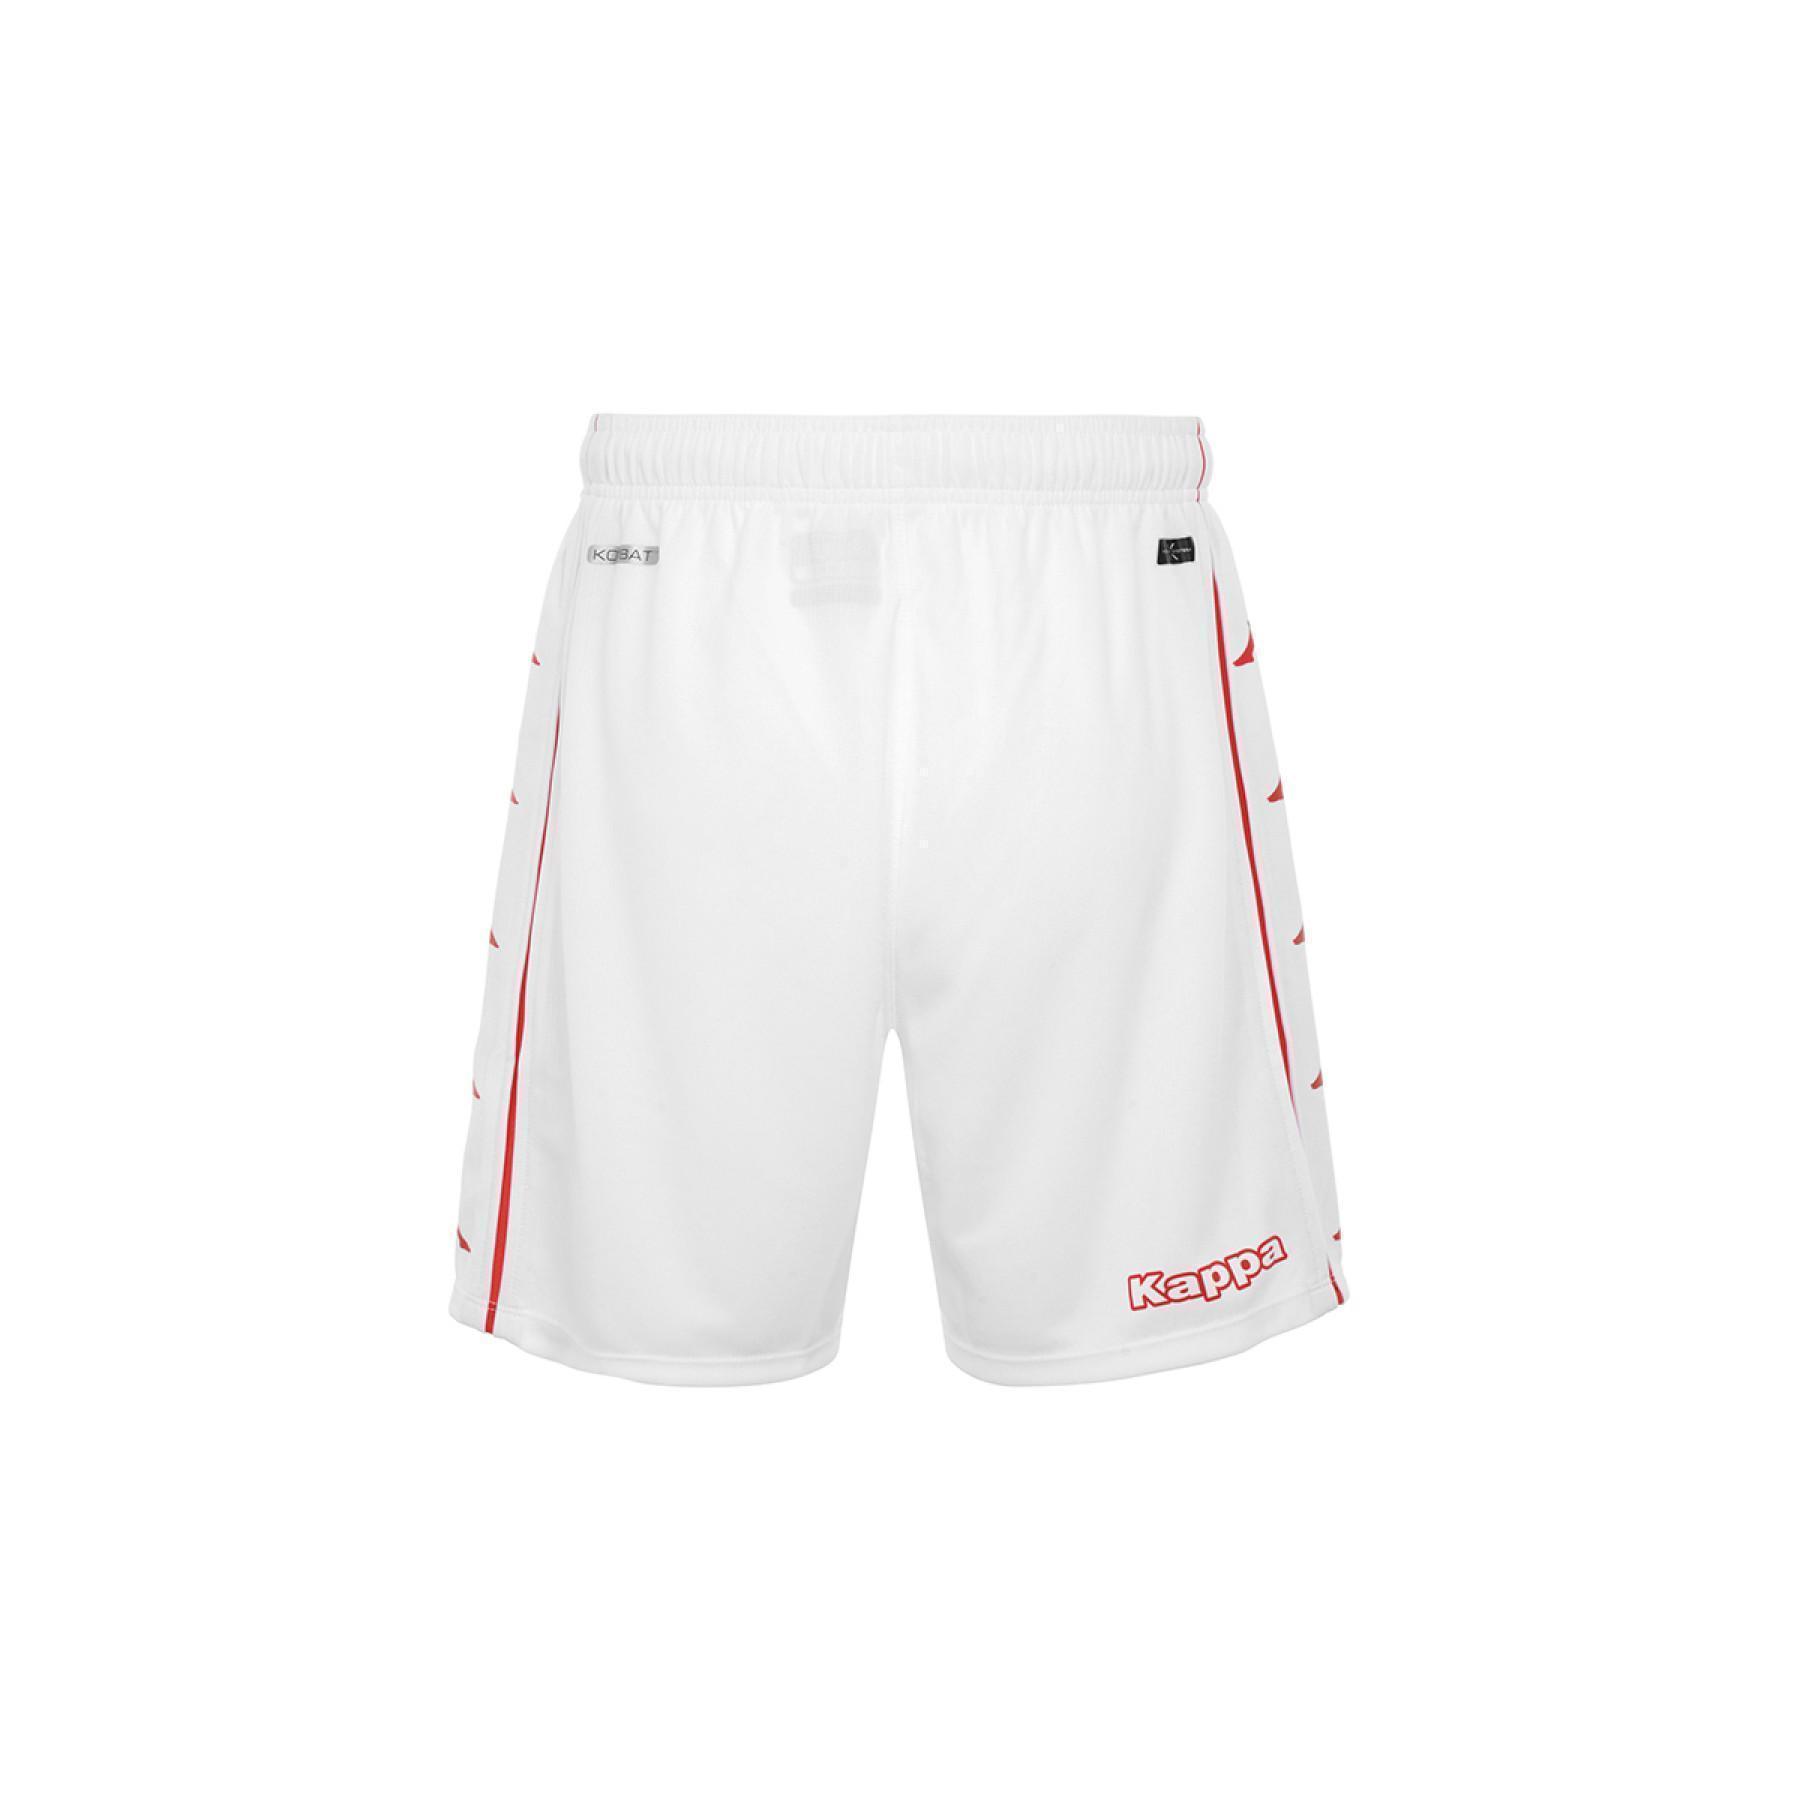 Barnens tredje shorts AS Monaco 2020/21